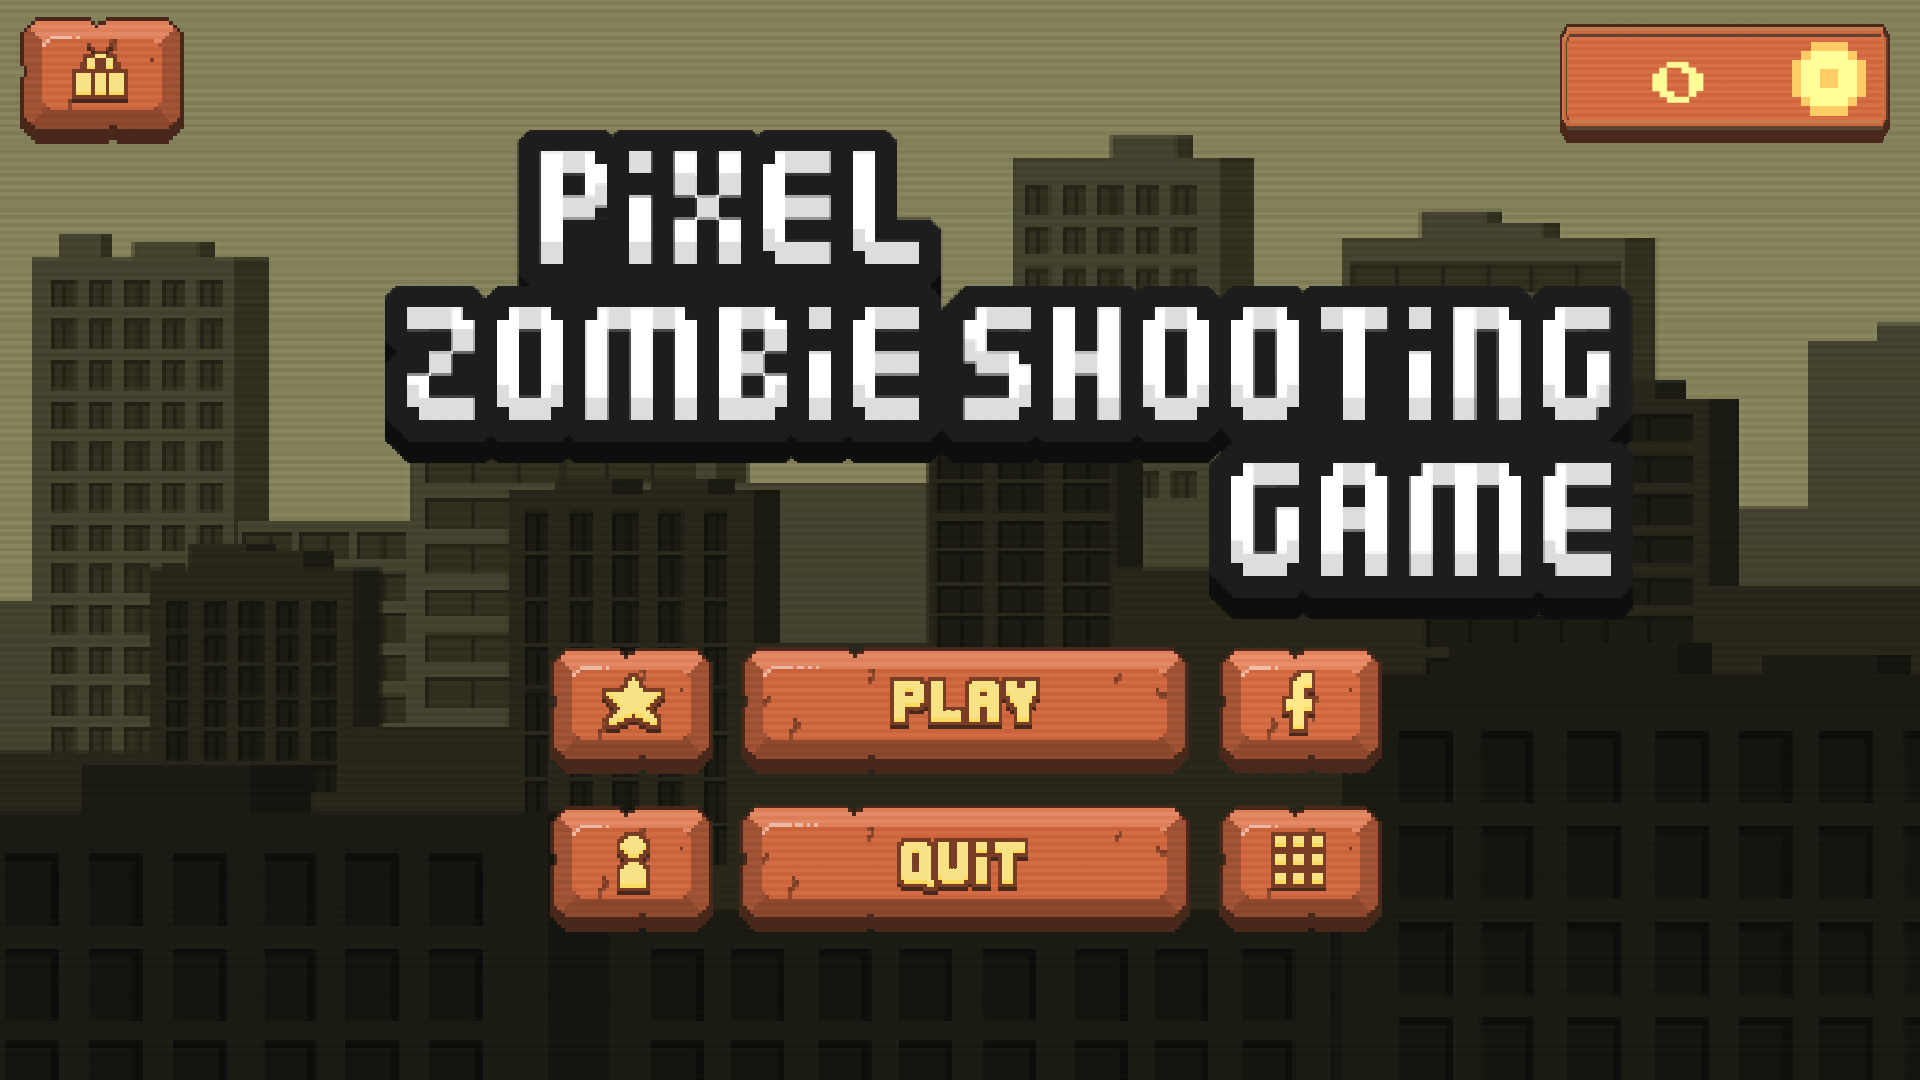 PZSG 01 - Pixel Zombie Shooting Game